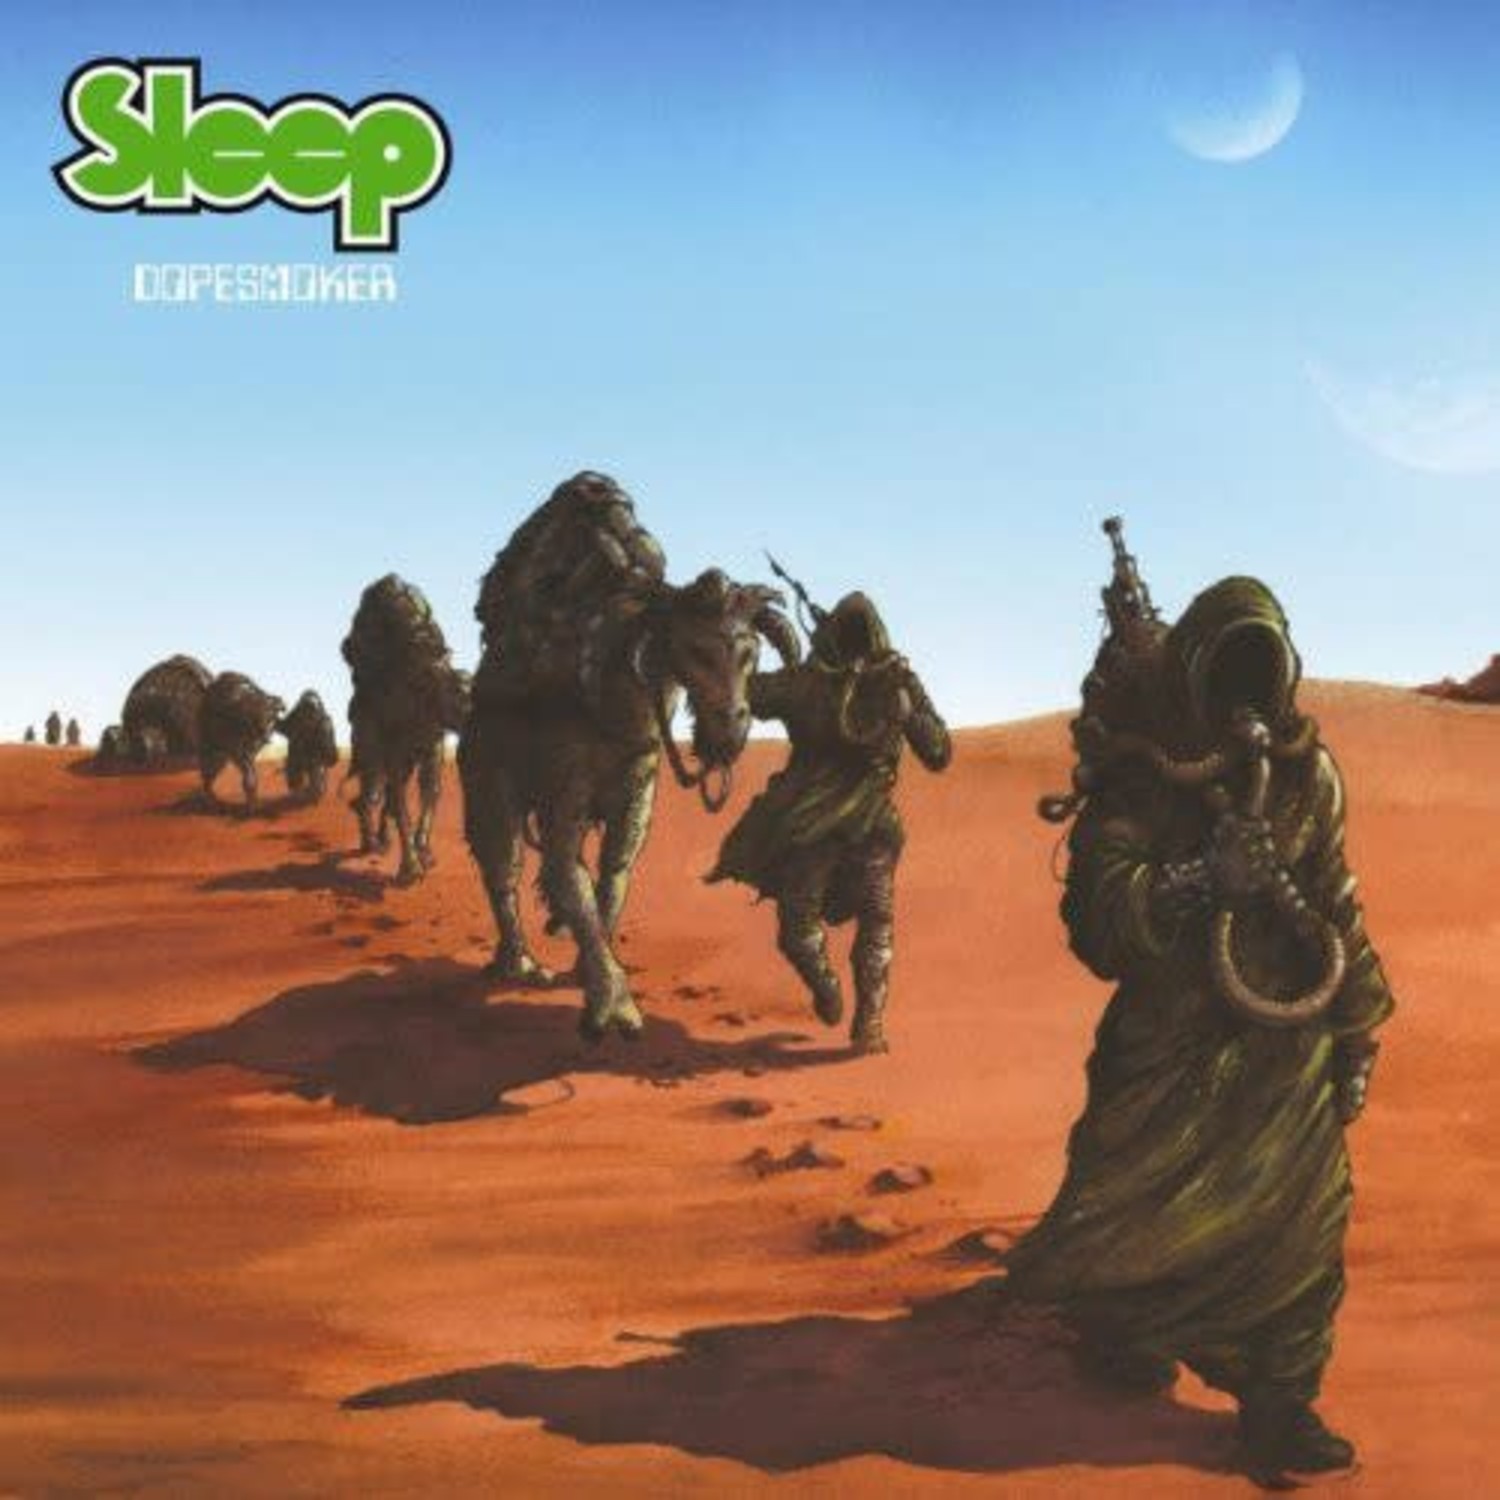 PRE-ORDER - Sleep - Dopesmoker 2LP - Wax Trax Records